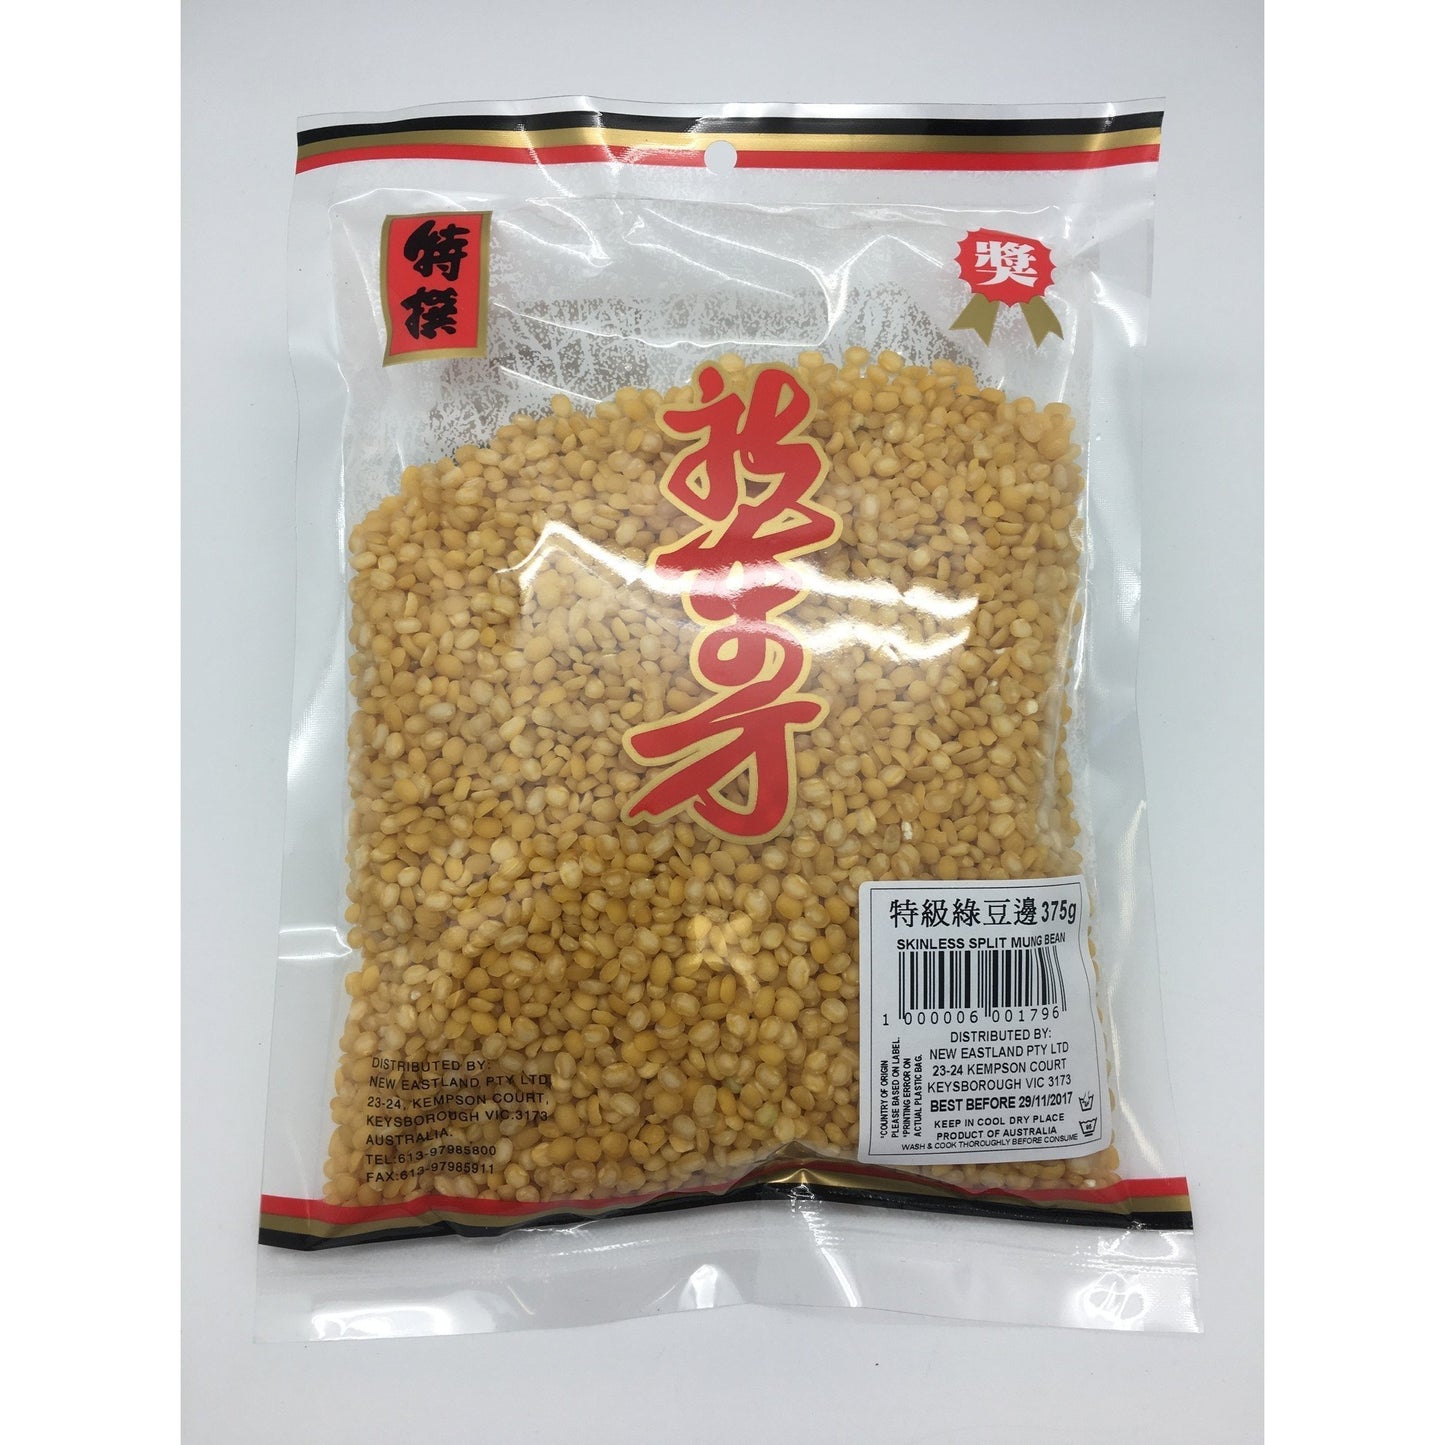 D179S New Eastland Brand - Skinless Split Mung Bean 375g - 40 bags / 1 CTN - New Eastland Pty Ltd - Asian food wholesalers